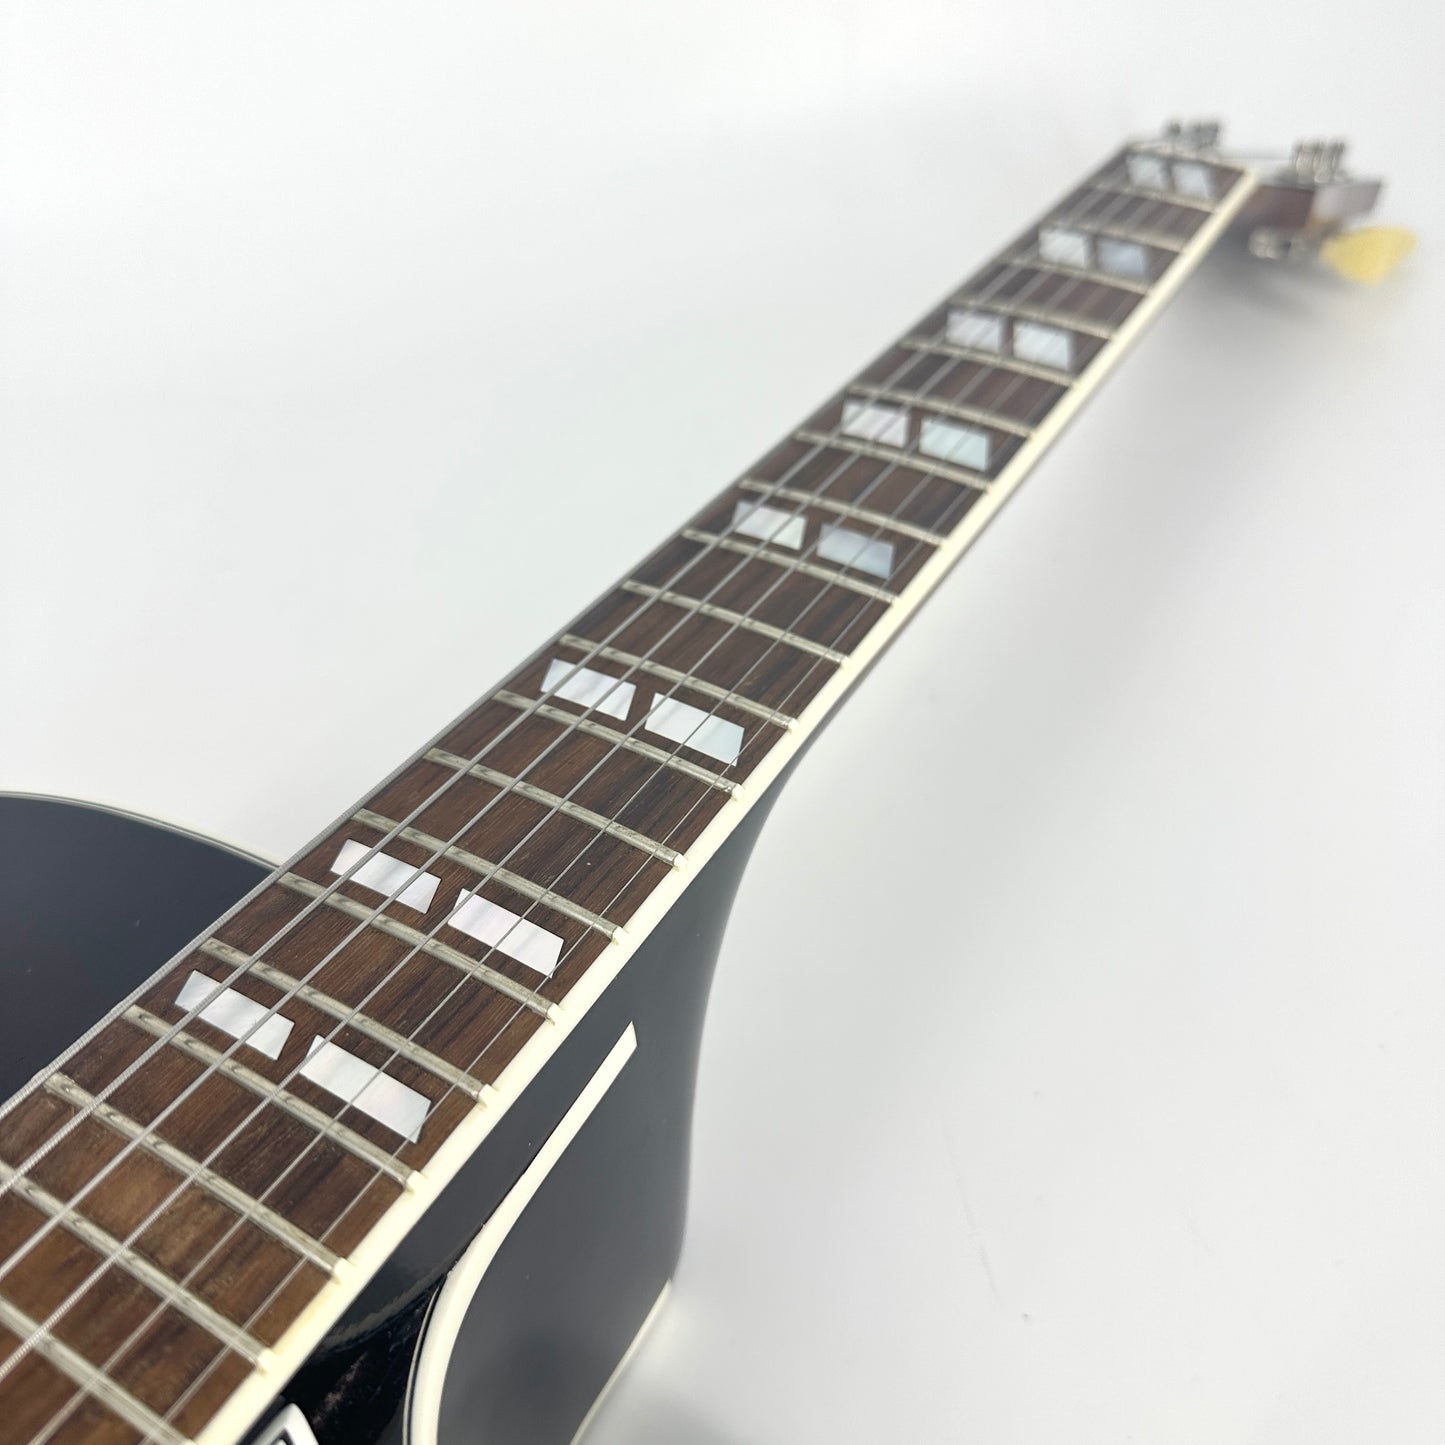 2012 Gibson Custom Shop ES-175 – Vintage Sunburst